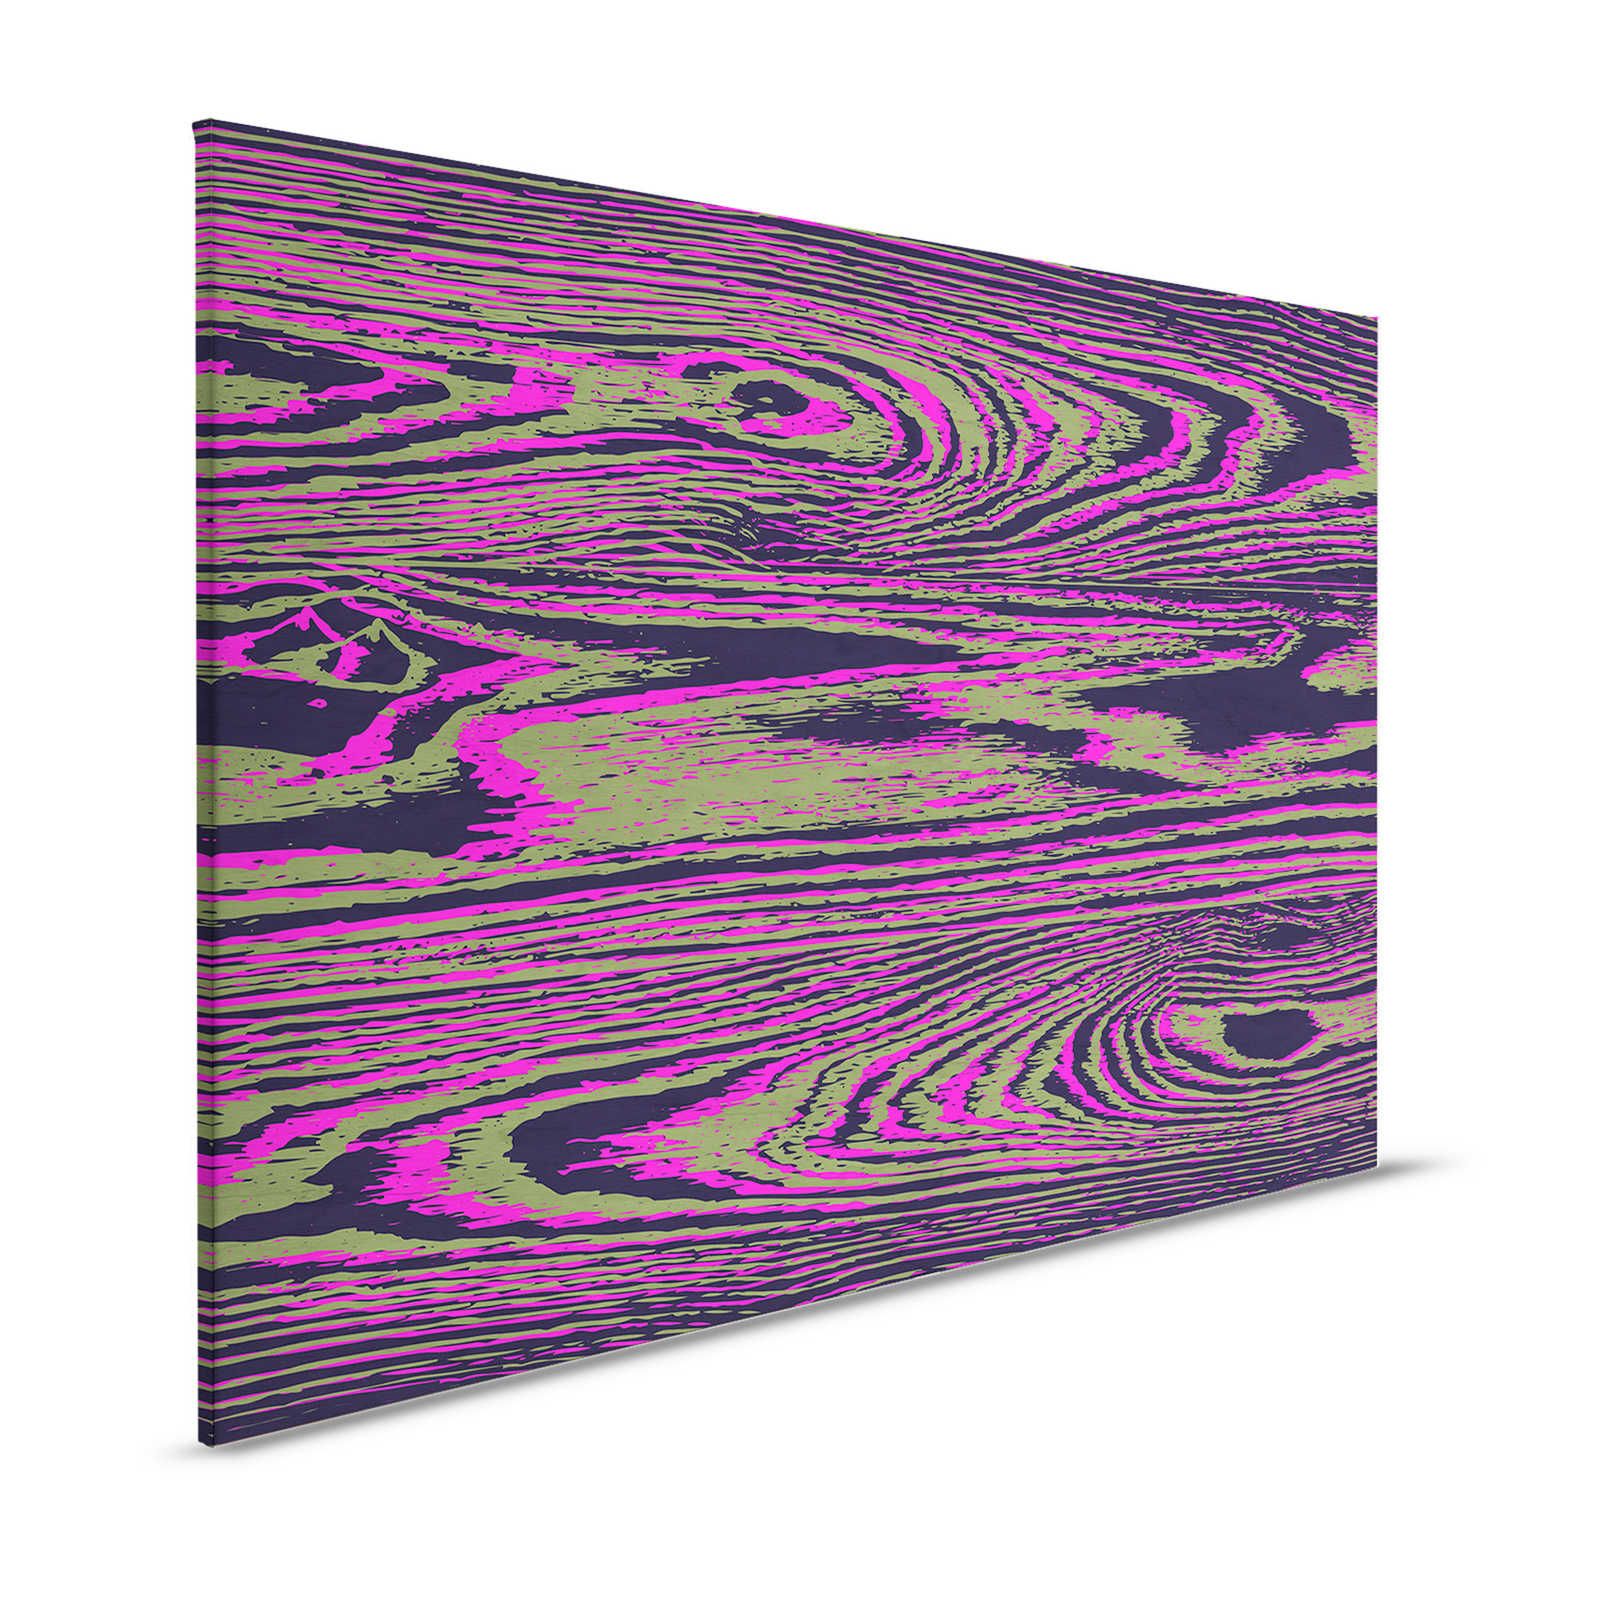 Kontiki 2 - Canvas painting Neon Wood Grain, Pink & Black - 1.20 m x 0.80 m
